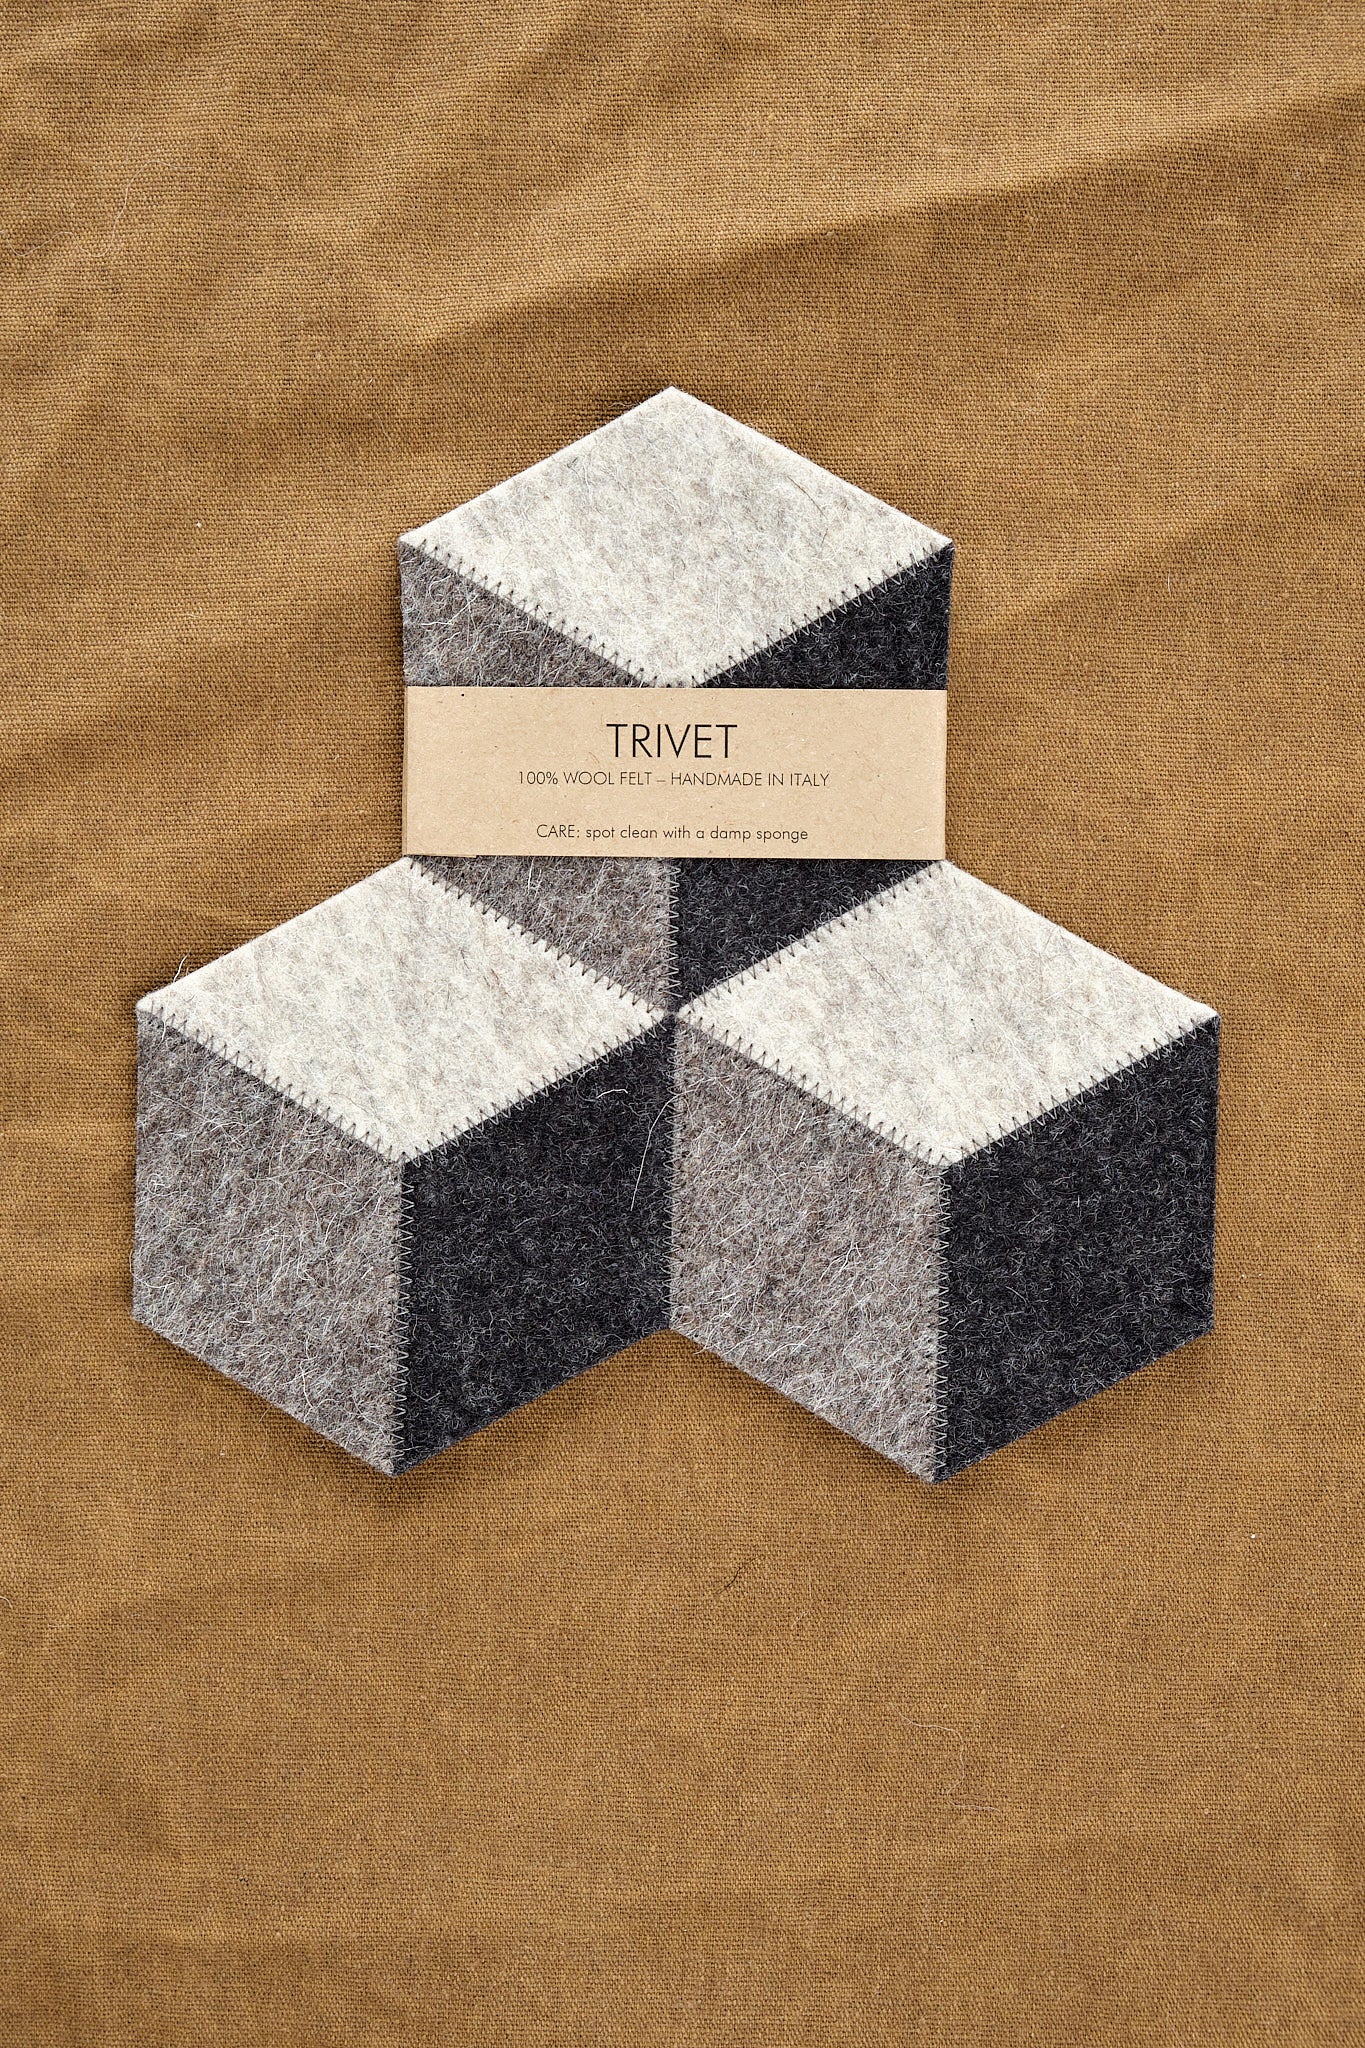 Anonima Mente Design Hexagonal Felt Trivet charcoal